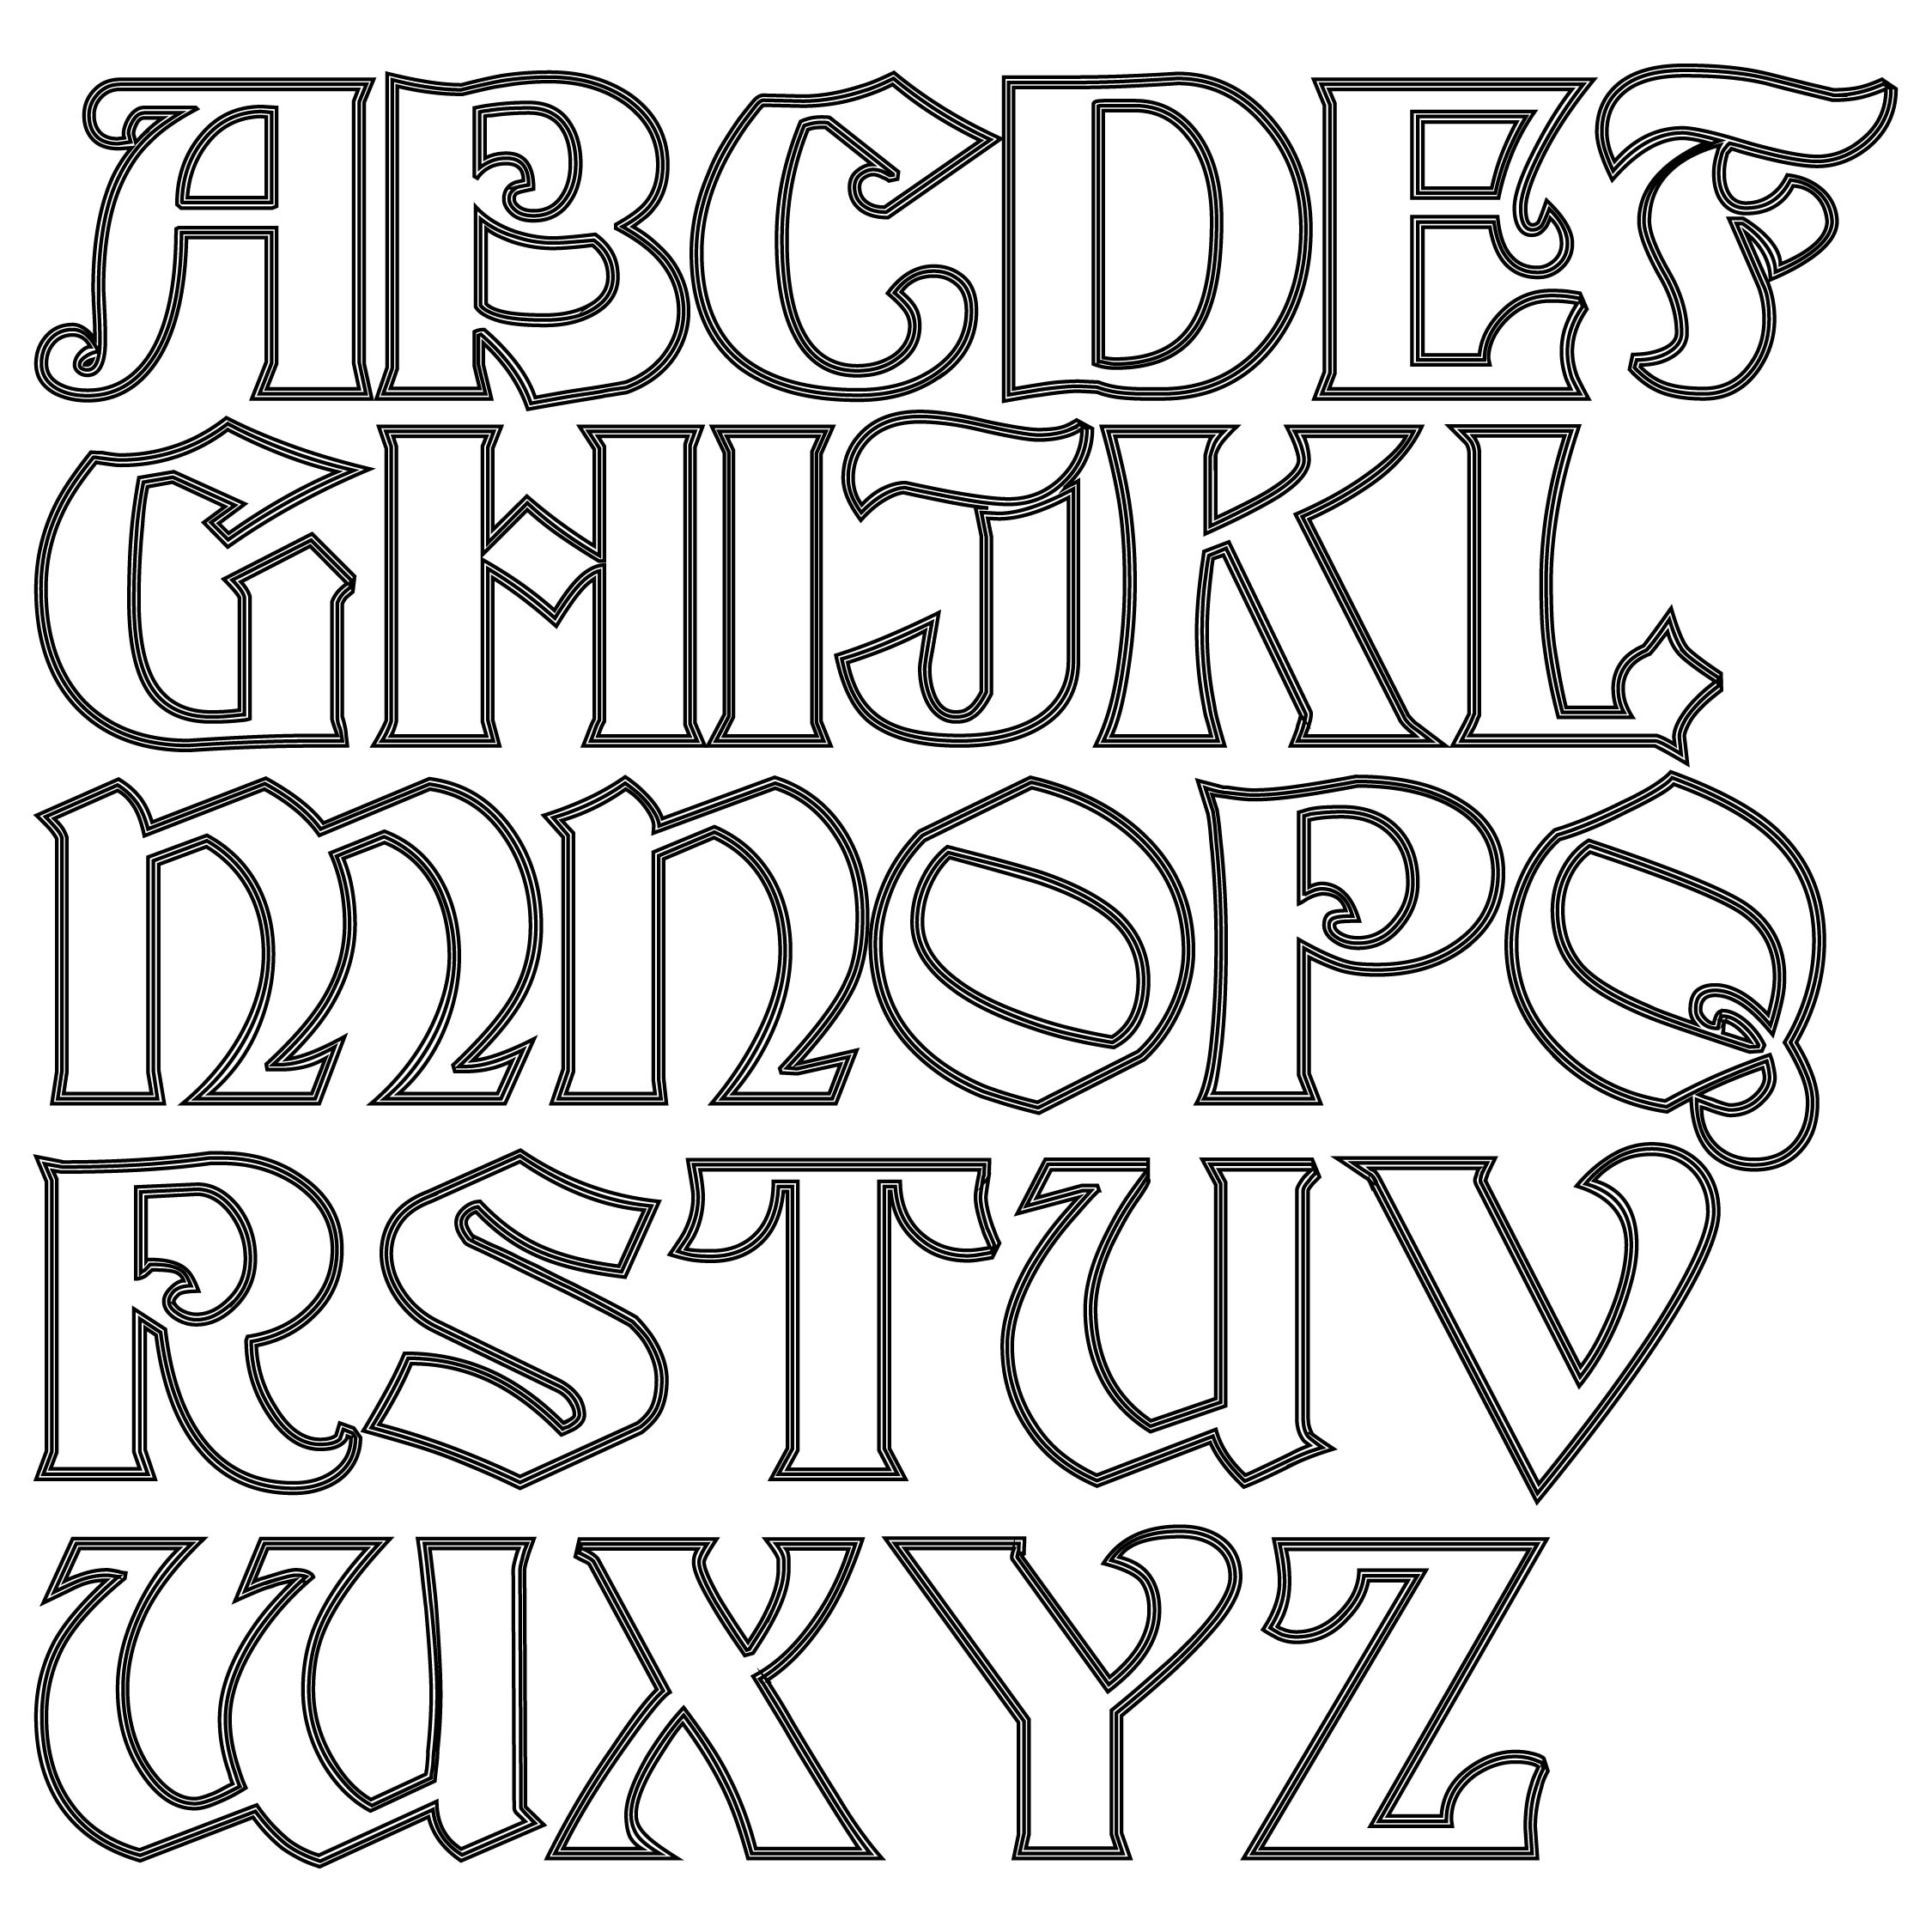 Cut Out Printable Letter Stencils